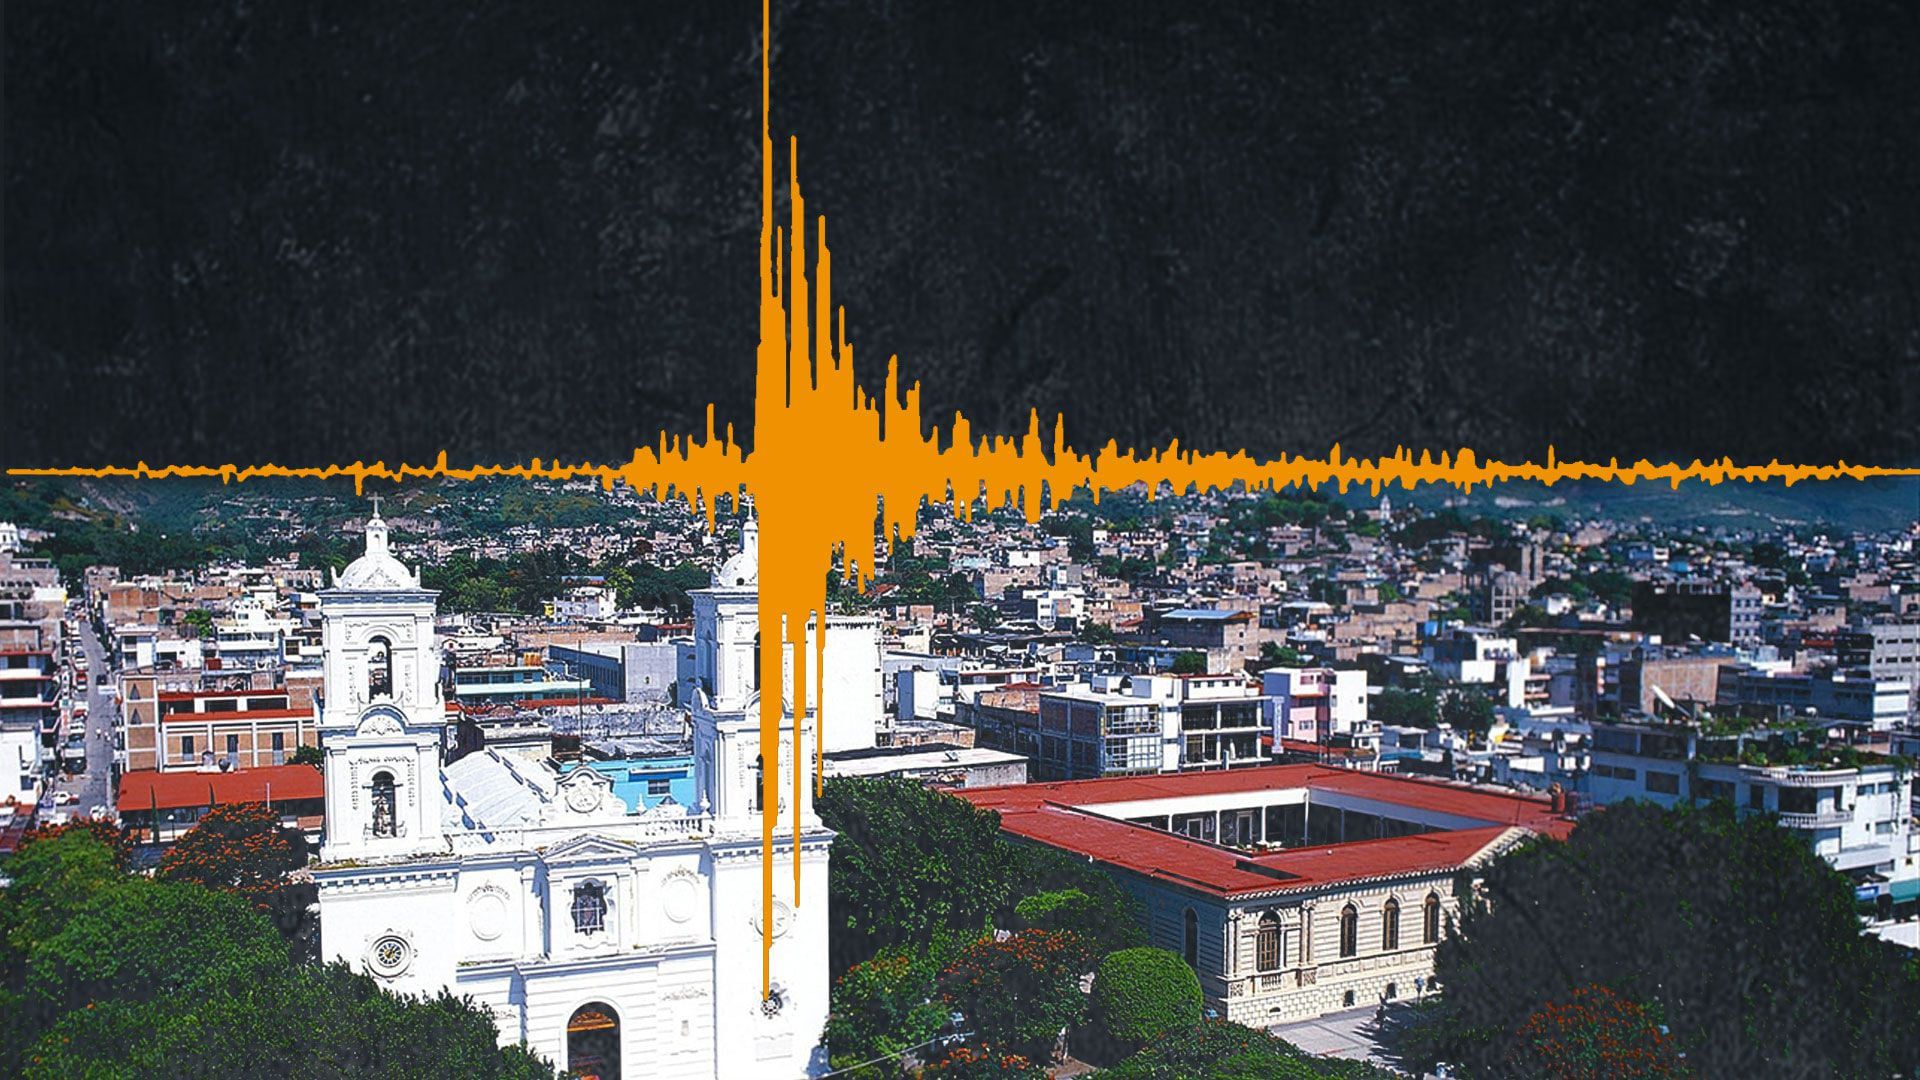 Sismo de magnitud 4.3 se registra en Baja California